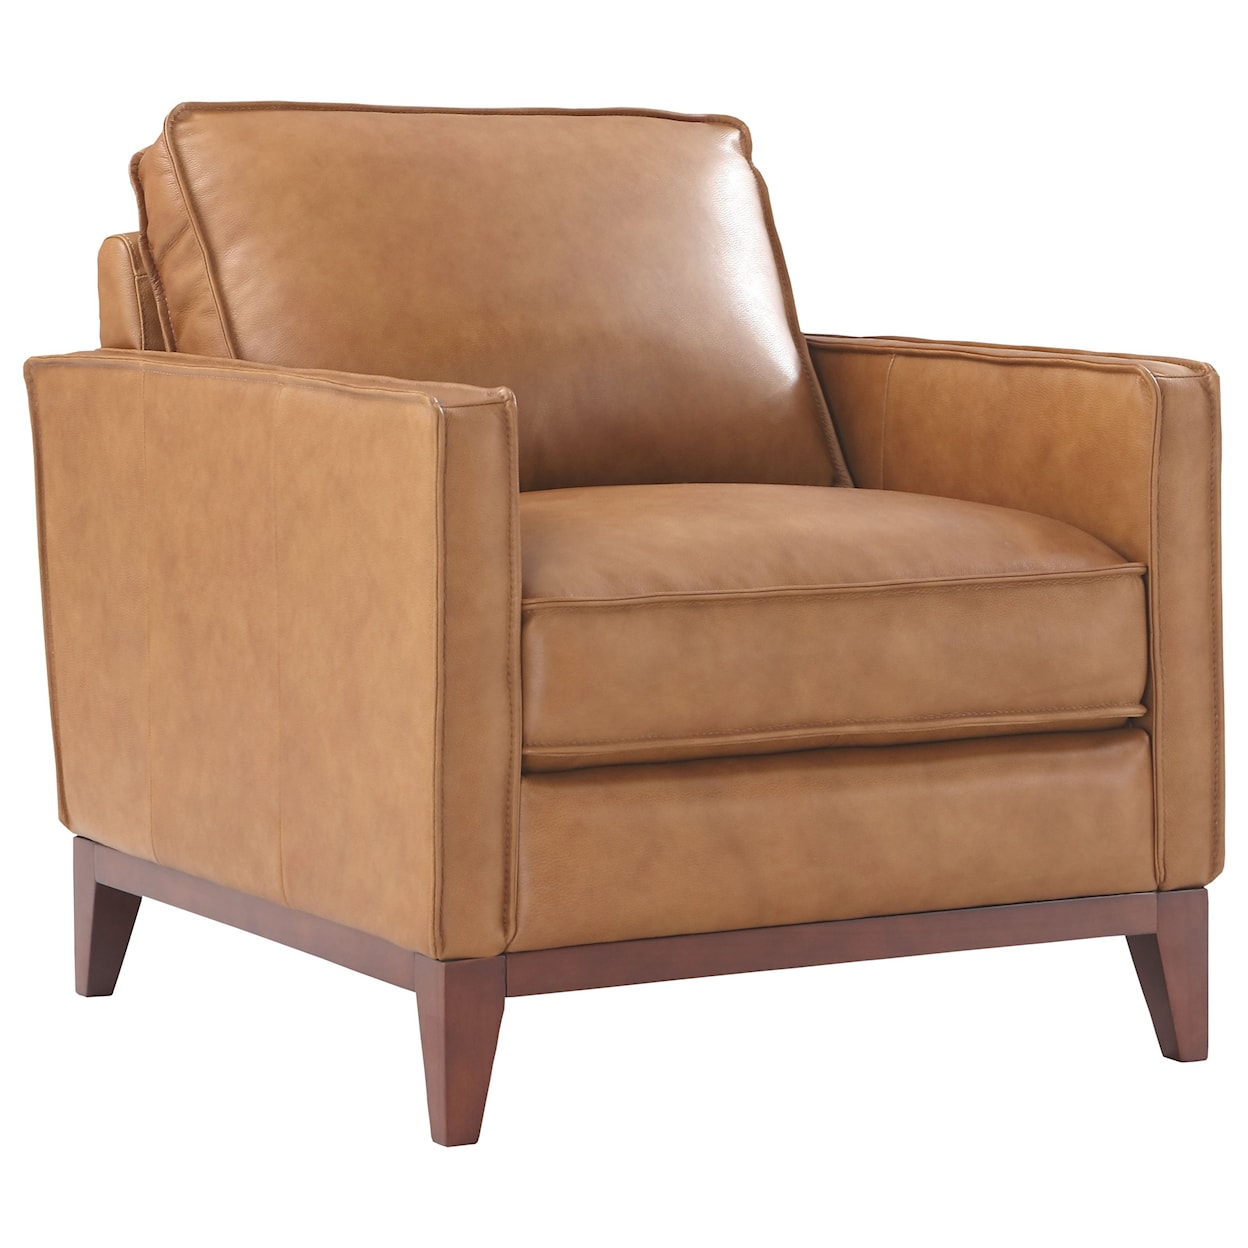 Carolina Leather Newport Chair